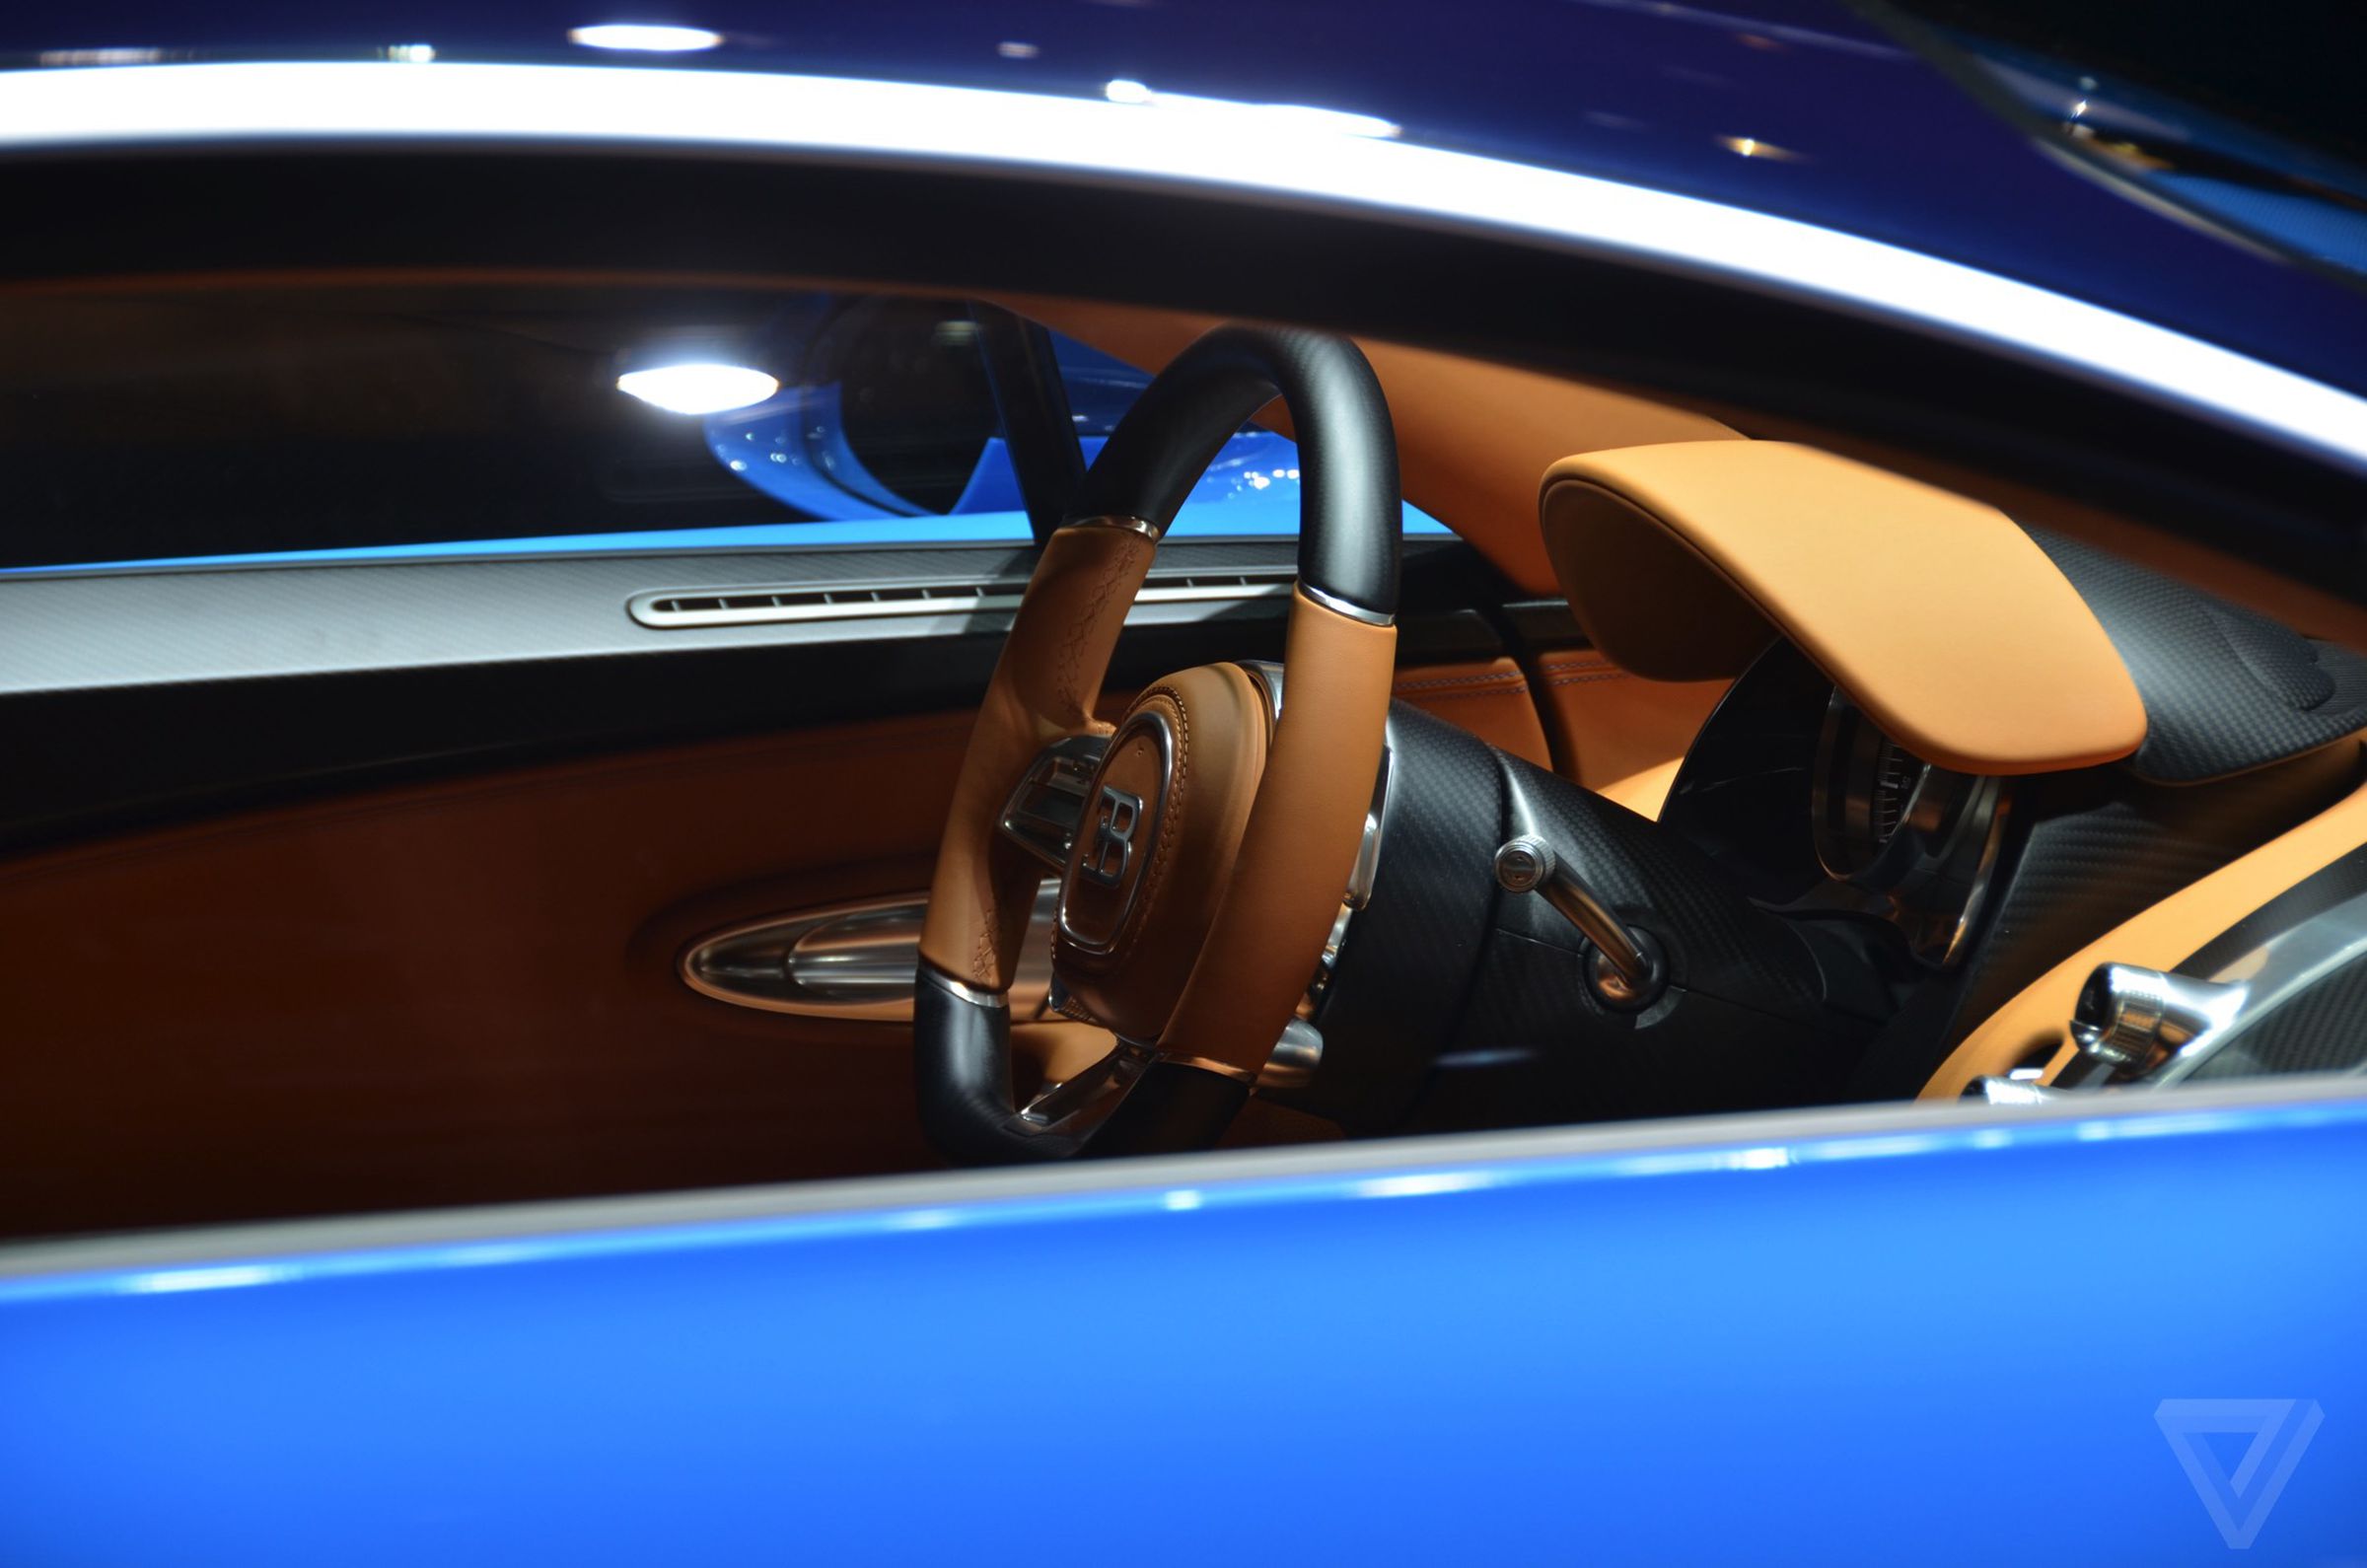 Bugatti Chiron Reveal